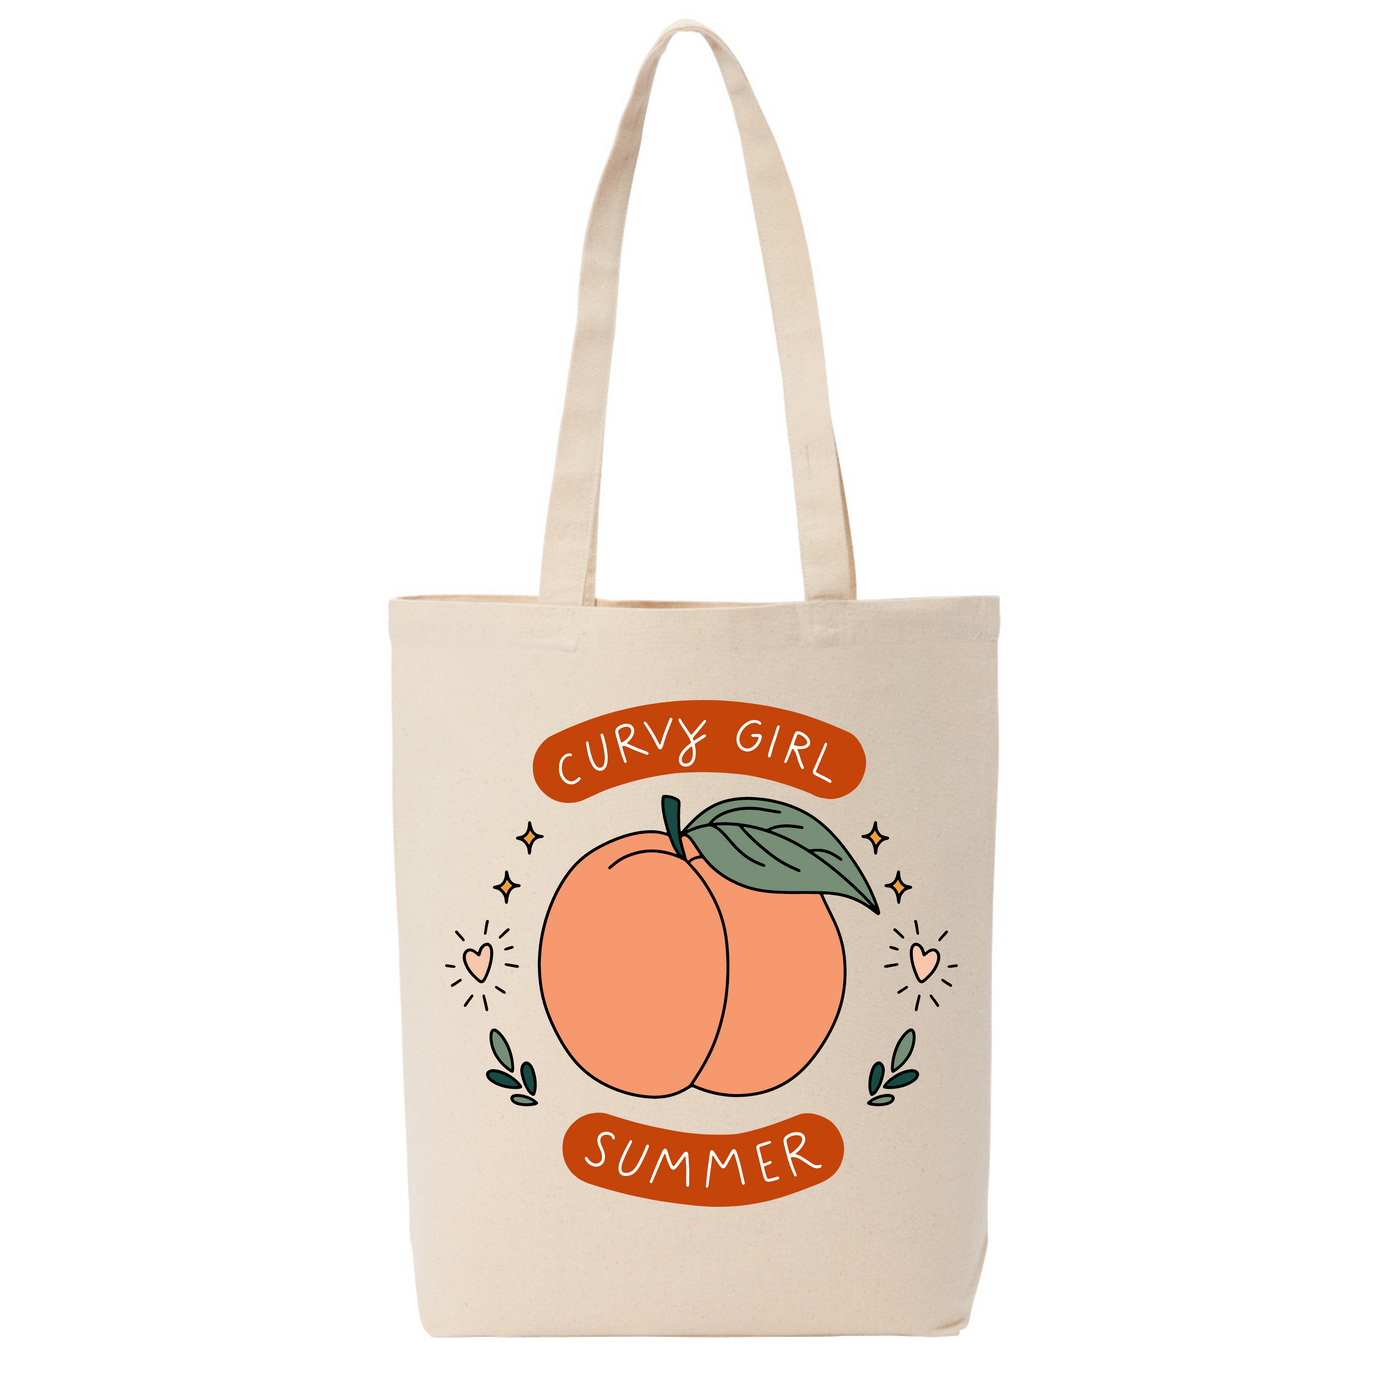 "Curvy Girl Summer" Tote Bag